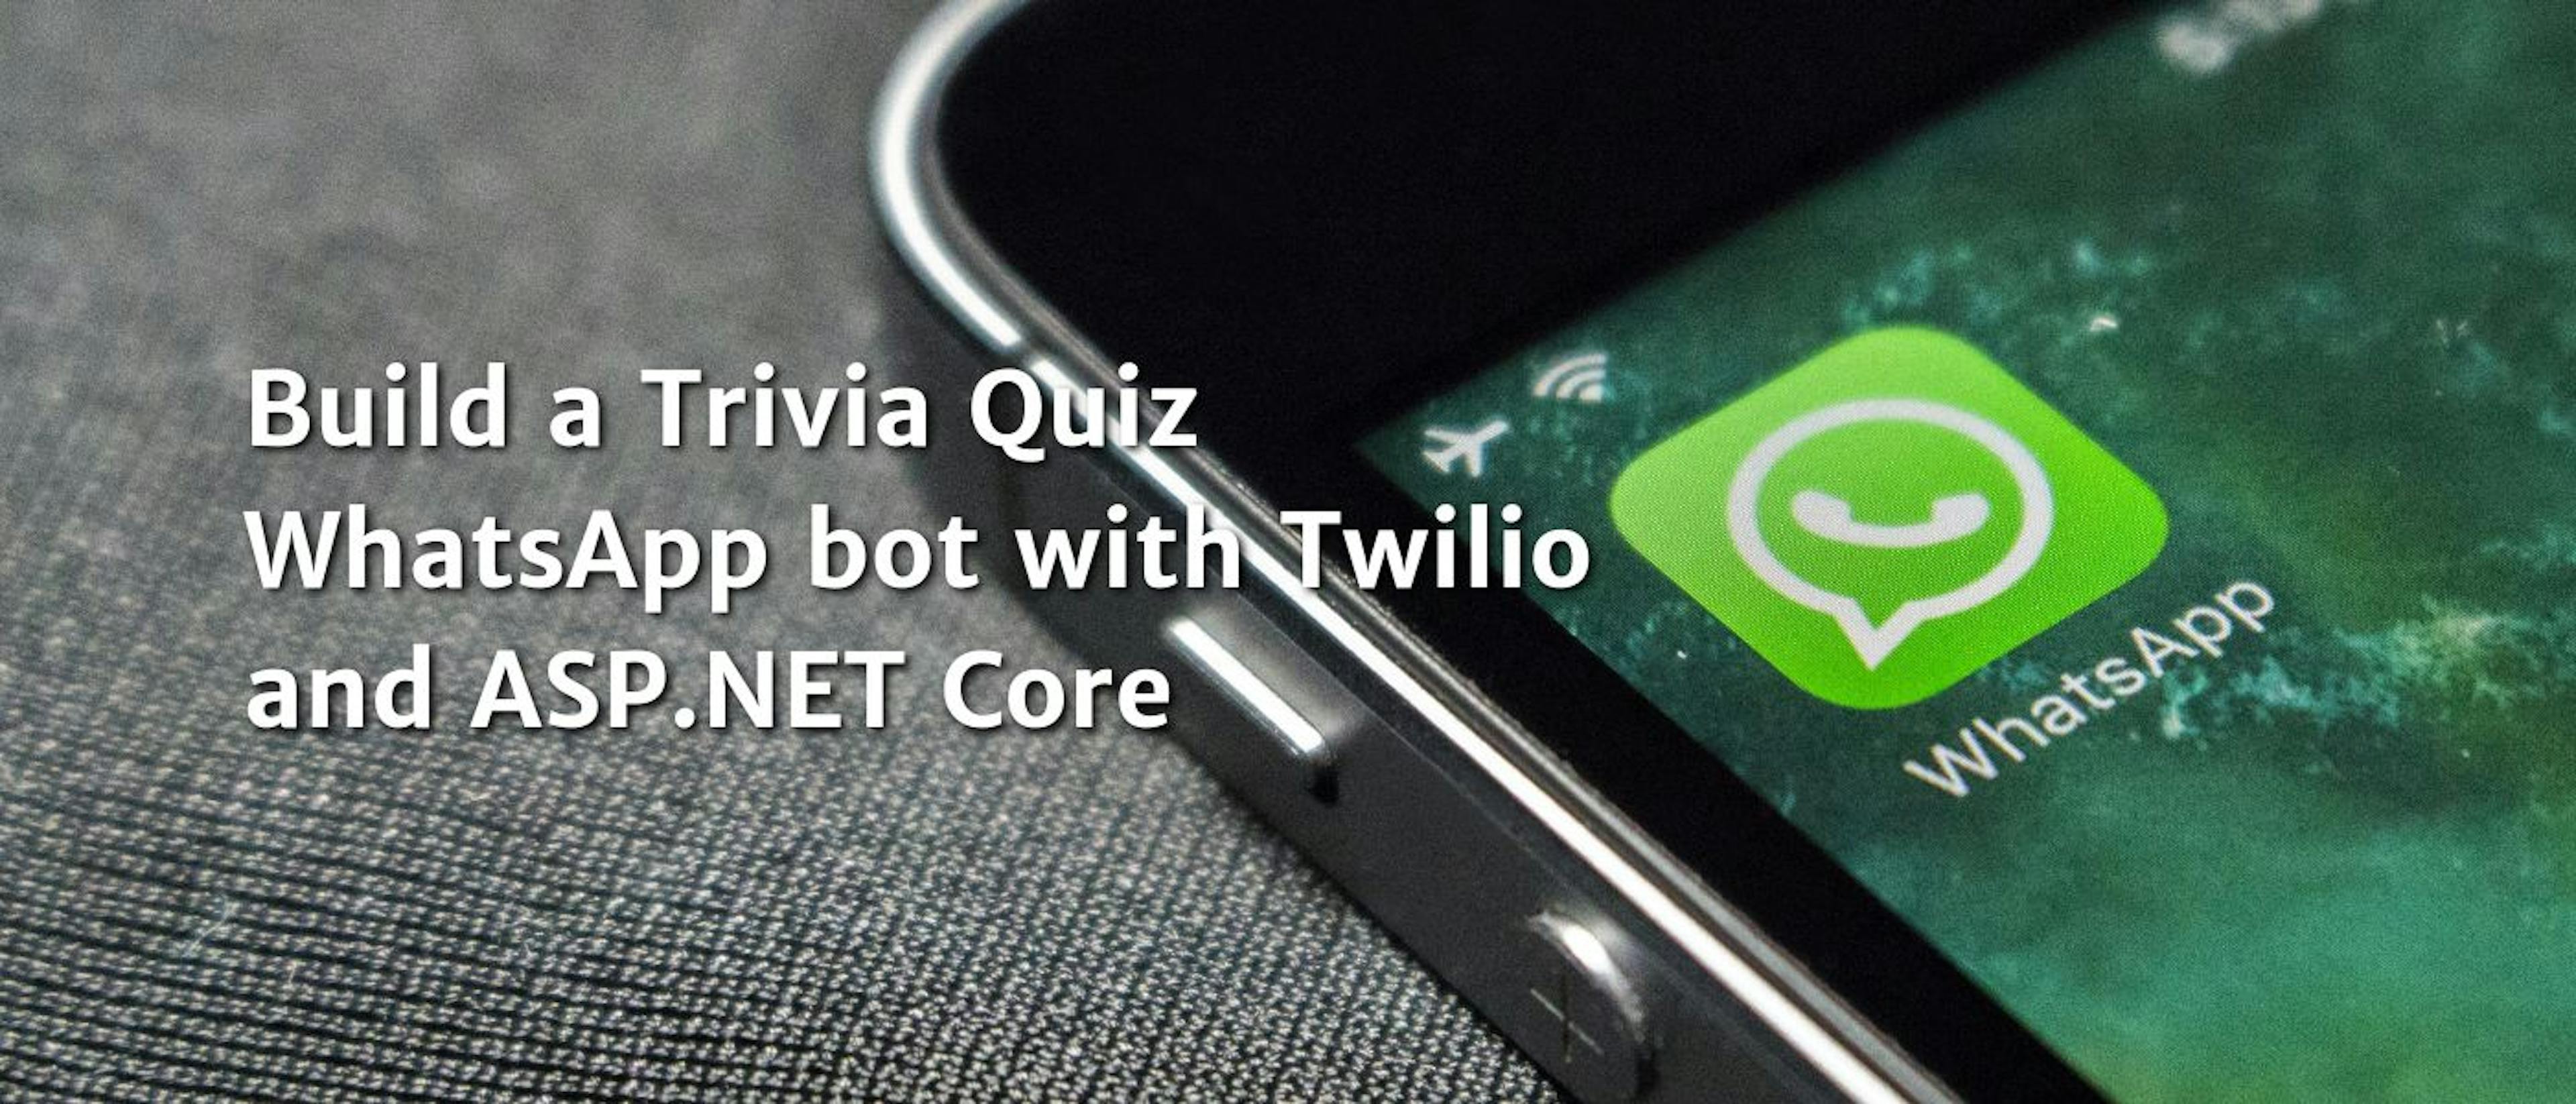 featured image - Twilio 및 ASP.NET Core를 사용하여 상식 퀴즈 WhatsApp Bot 구축